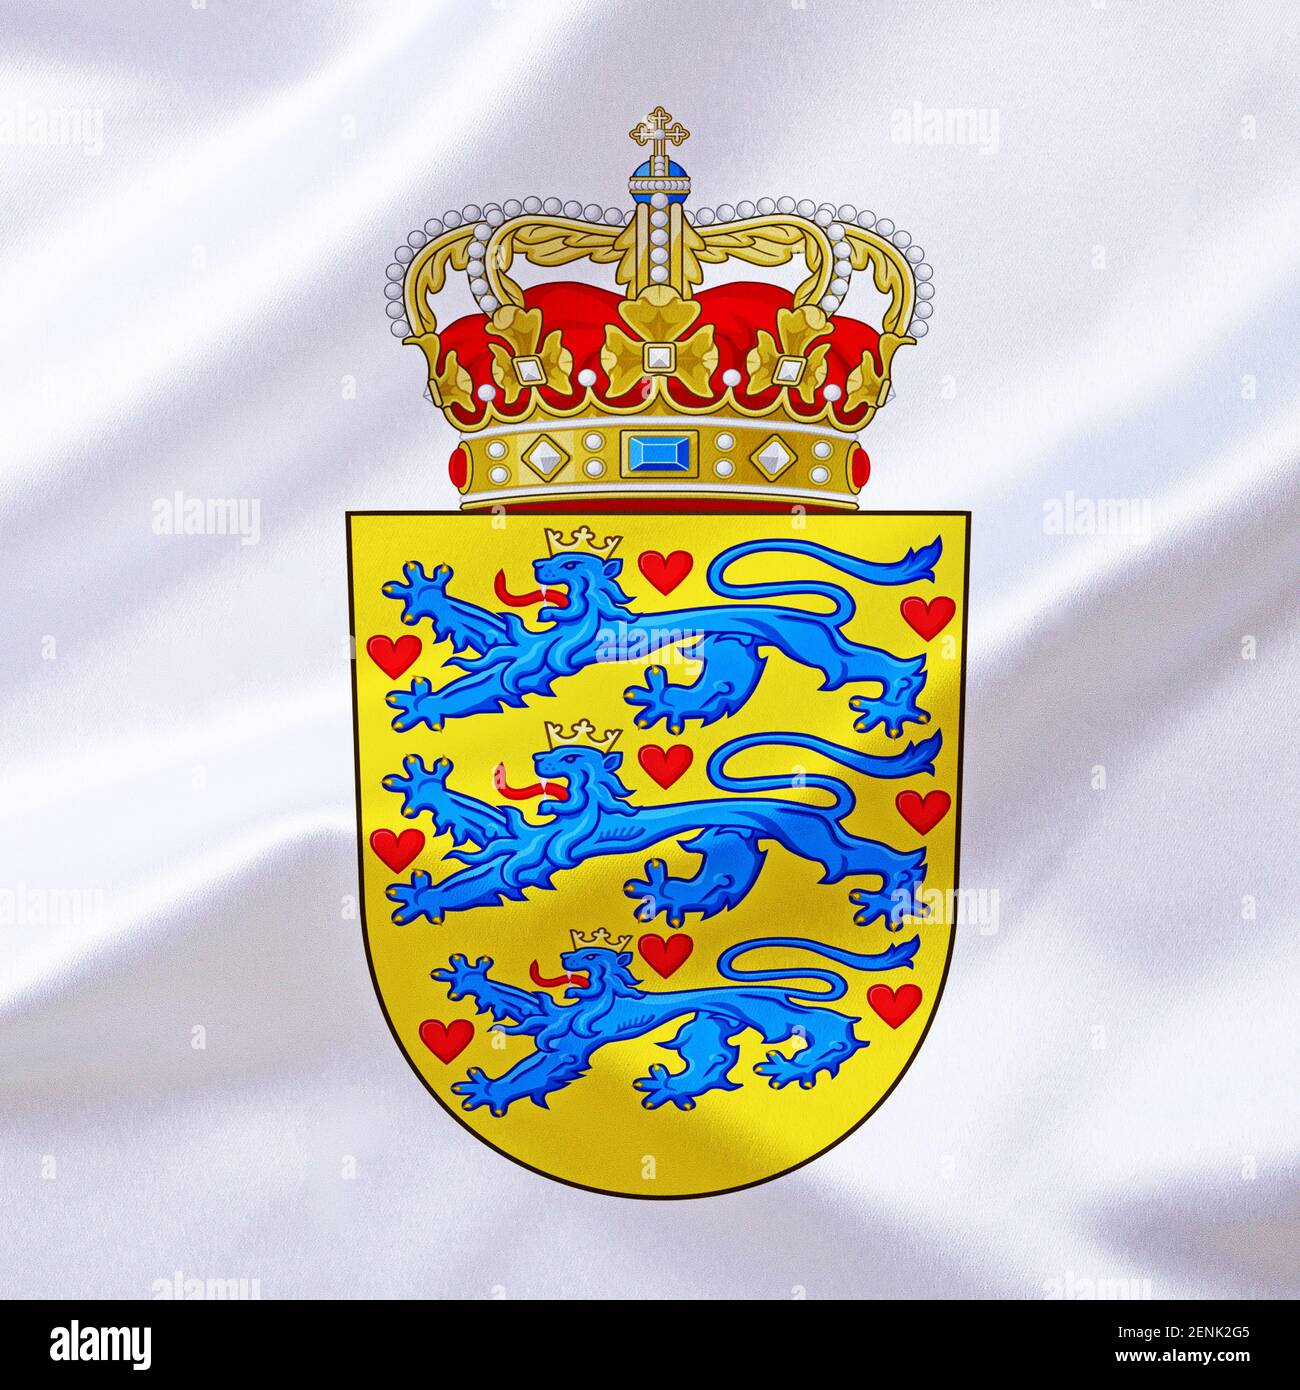 Das Wappen von Dänemark, Europa, EU Stock Photo - Alamy